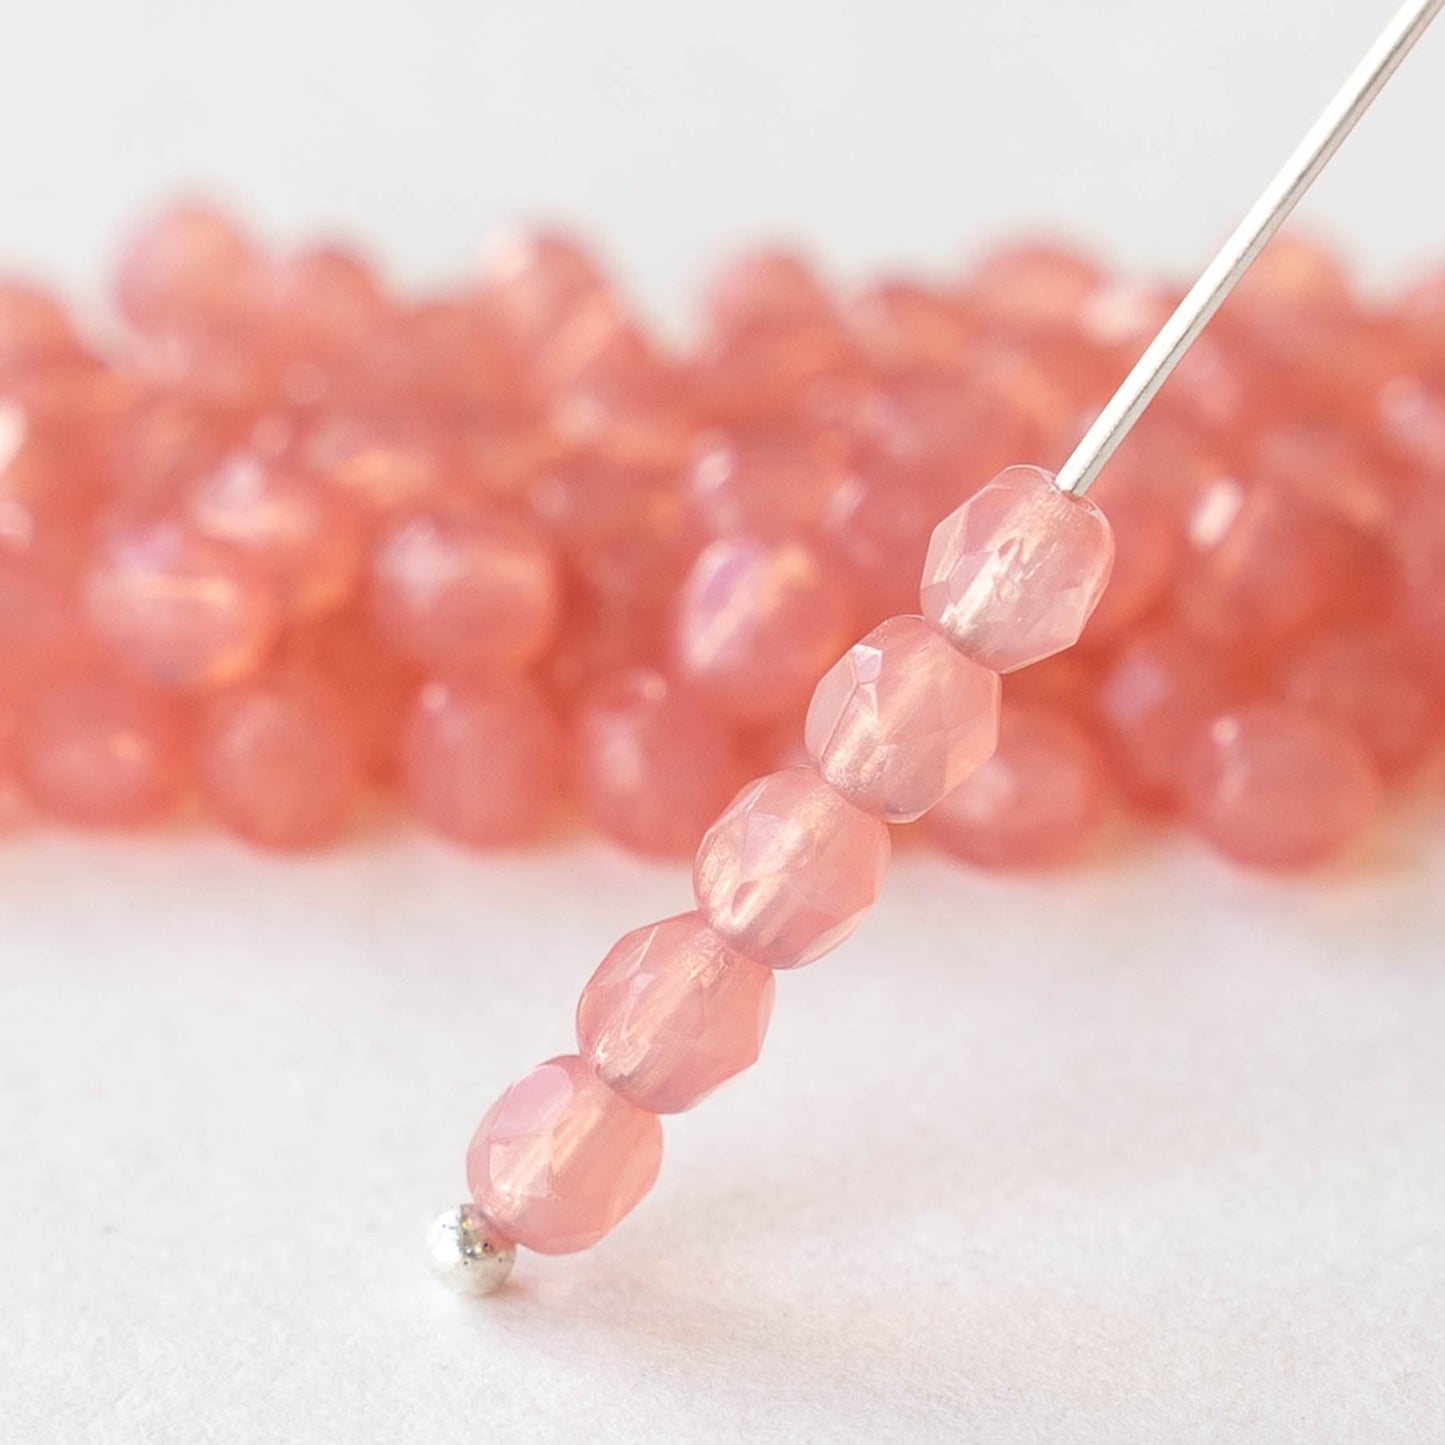 4mm Round Glass Beads - Opaline Rose - 100 Beads